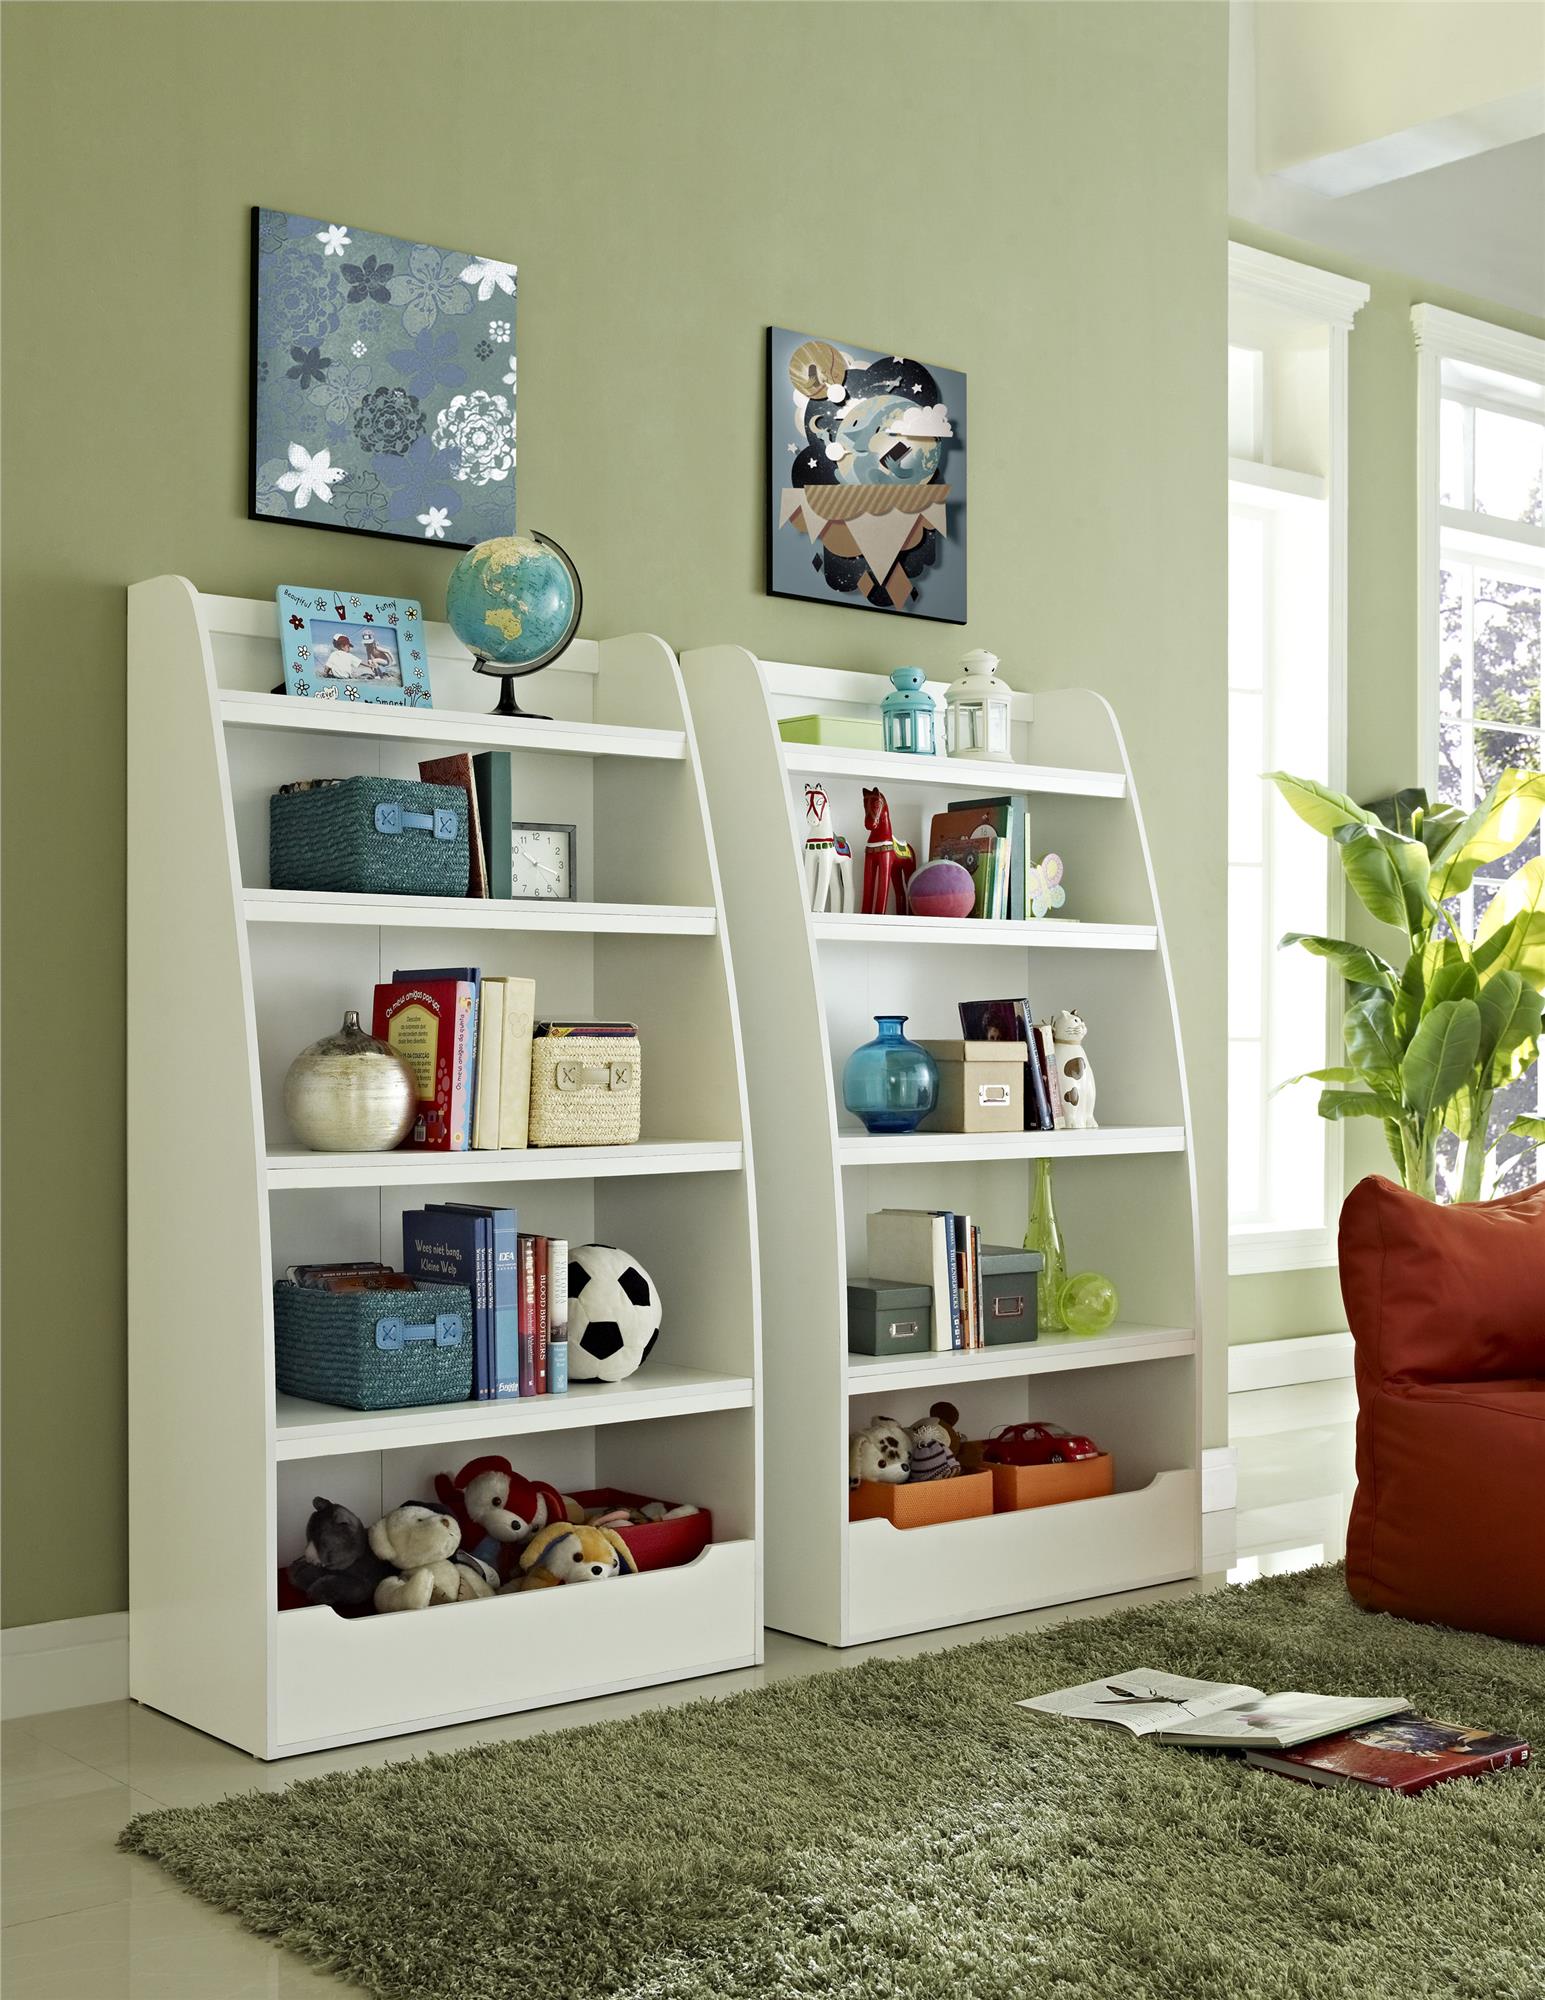 Mia Kids 4 Shelf Ladder Bookcase with Toy Storage - White